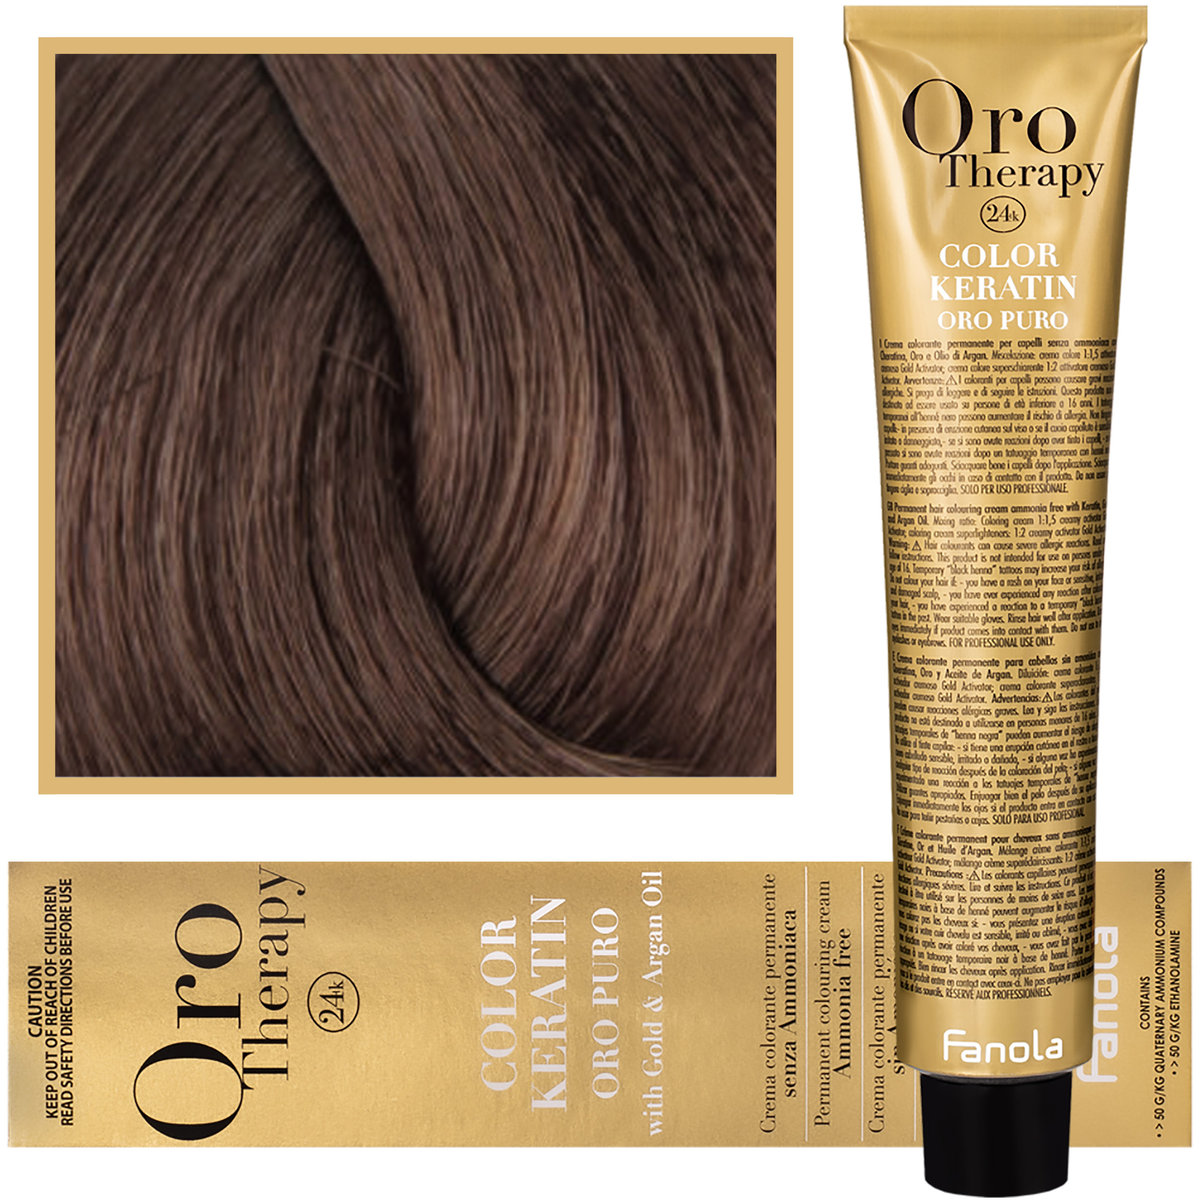 Fanola 6.31 Oro Puro Therapy Keratin Color 100 ML ciemny blond Sand HC-18-37